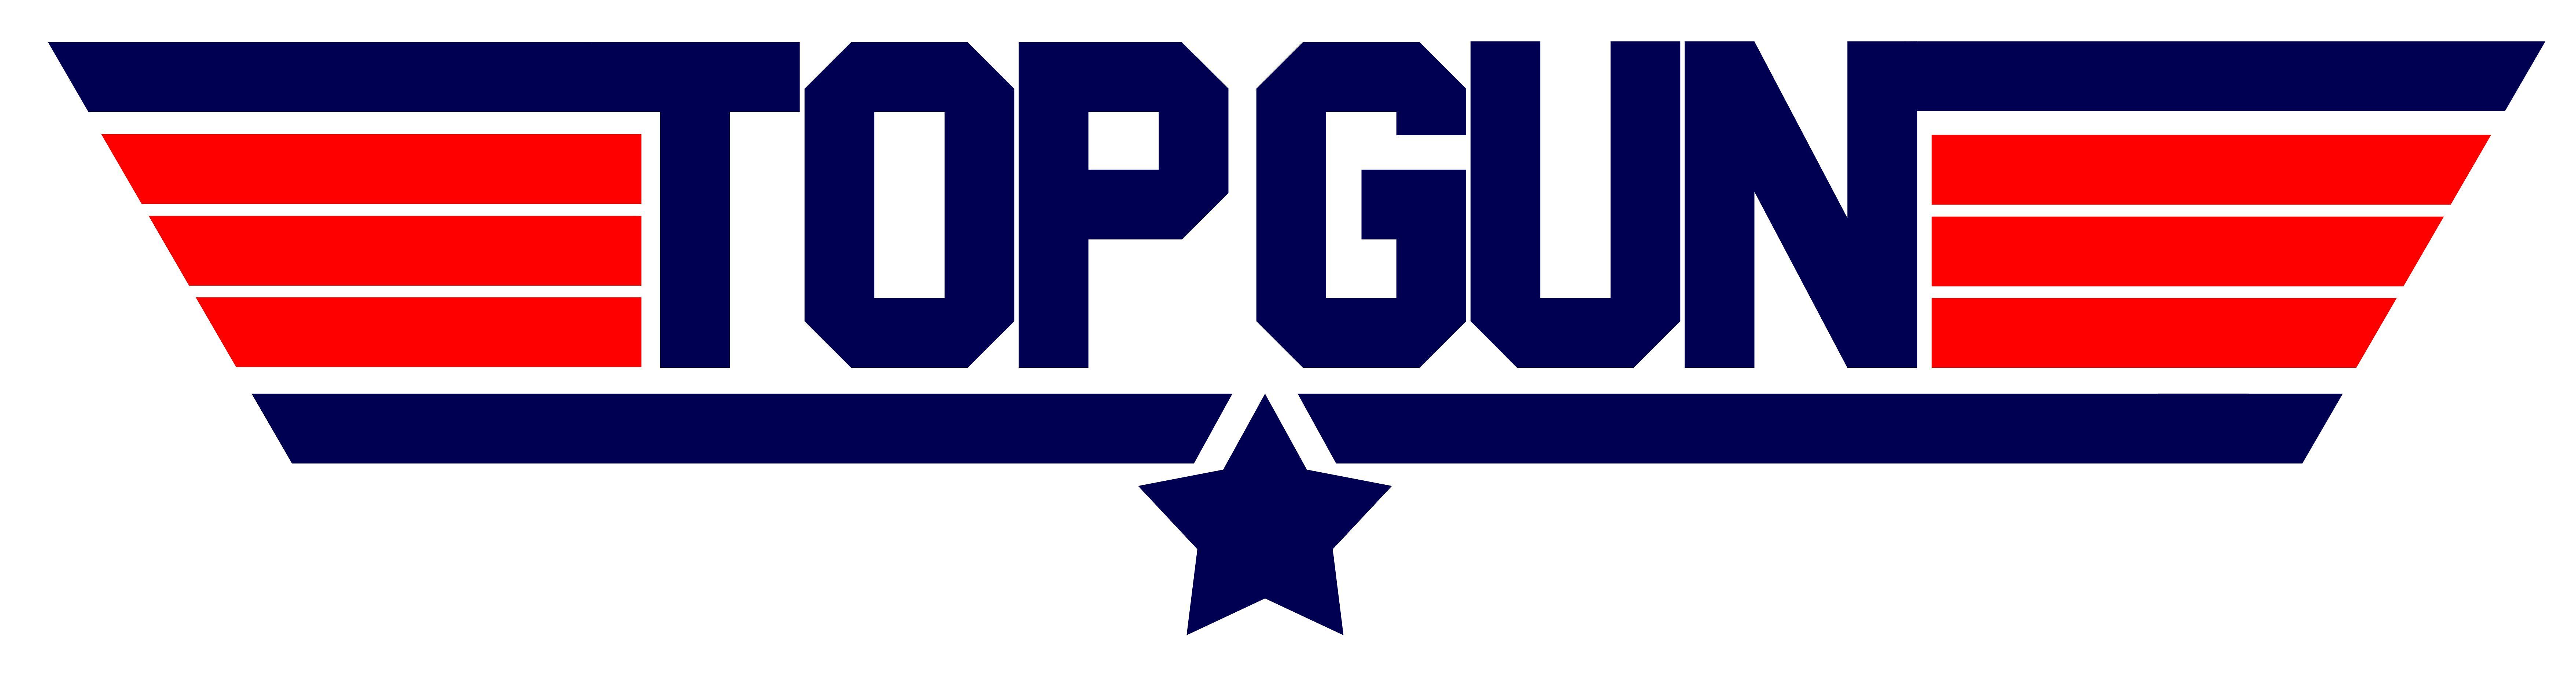 Top Gun Maverick Logo - What font is used in the Top Gun movie logo? - Quora